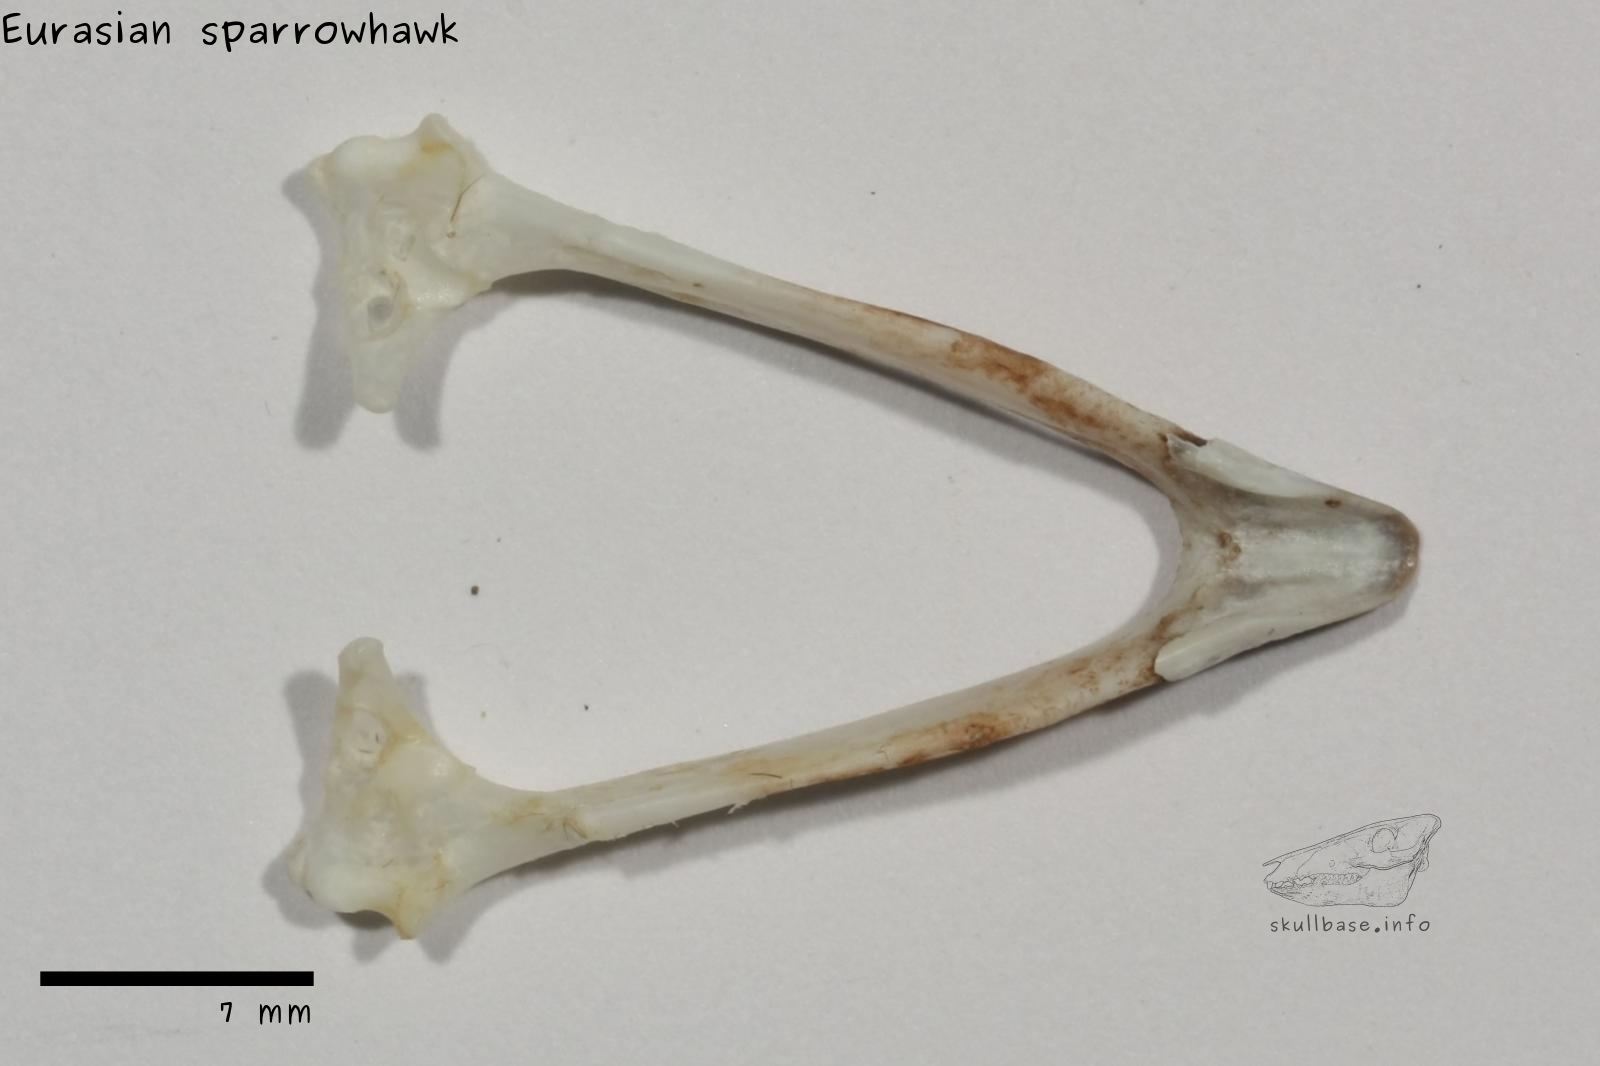 Eurasian sparrowhawk (Accipiter nisus) skull jaw